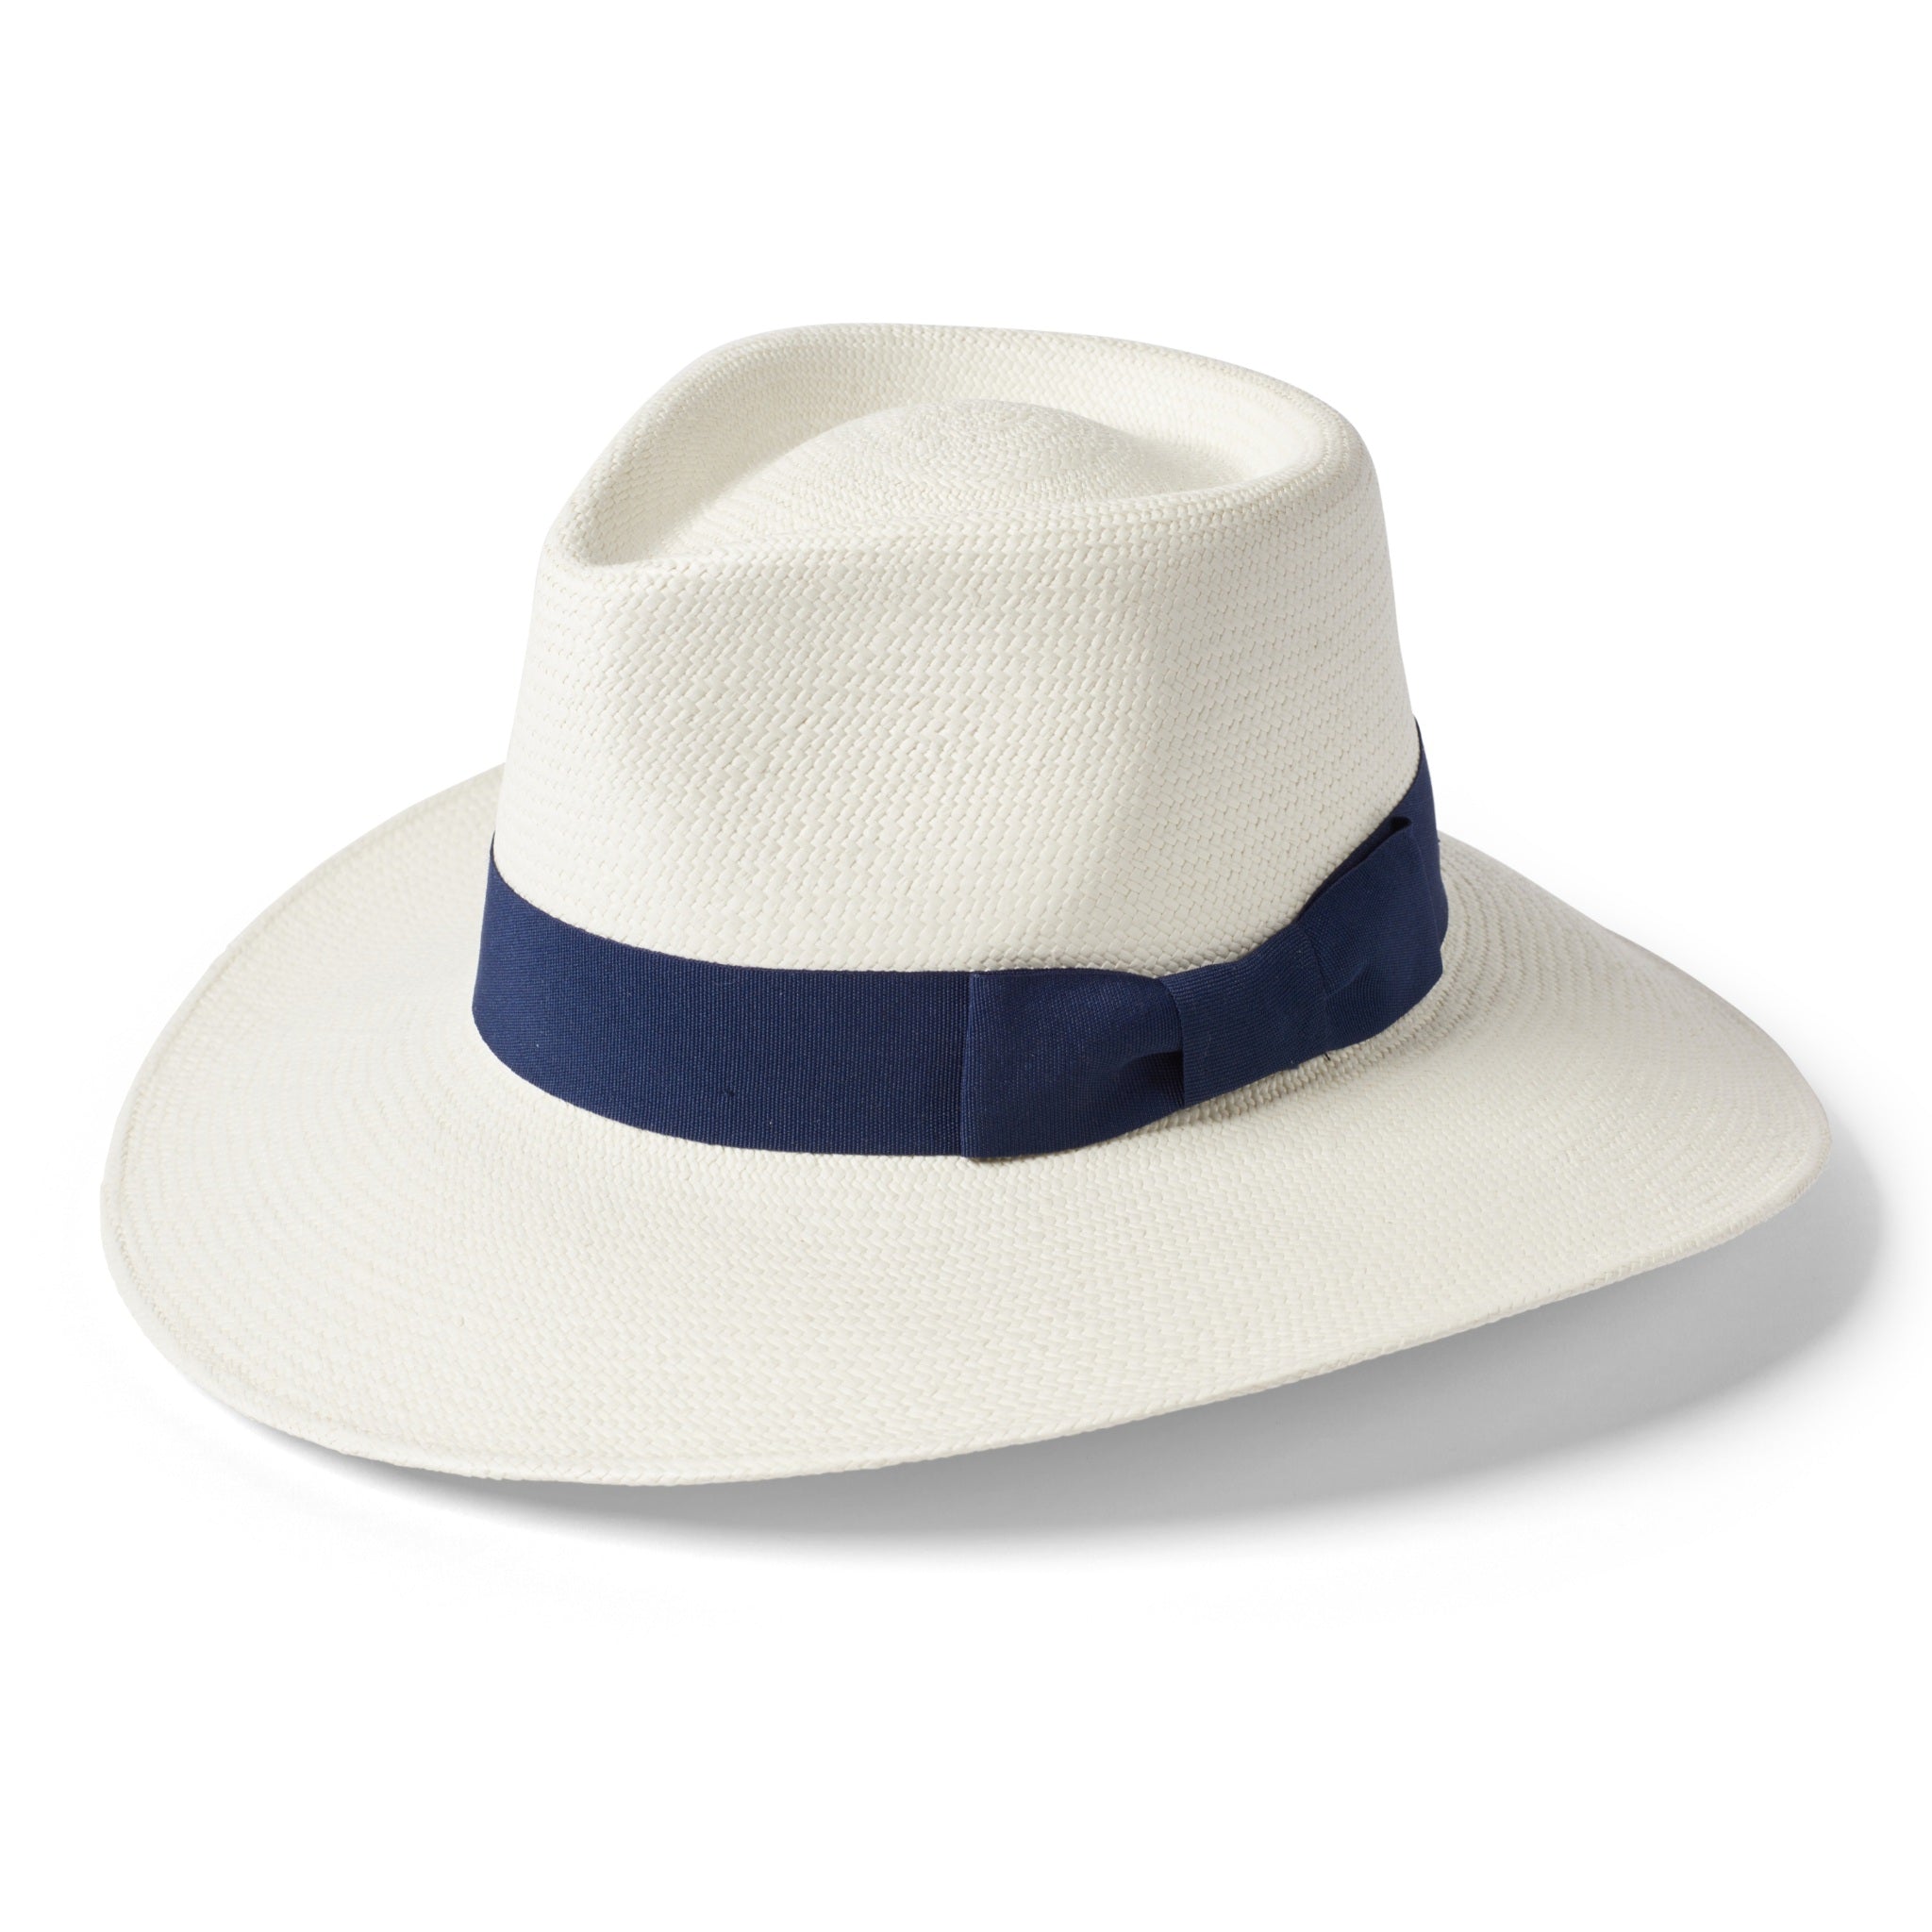 The Hat Shop Failsworth Ladies Hand Made Genuine Panama Hat Navy